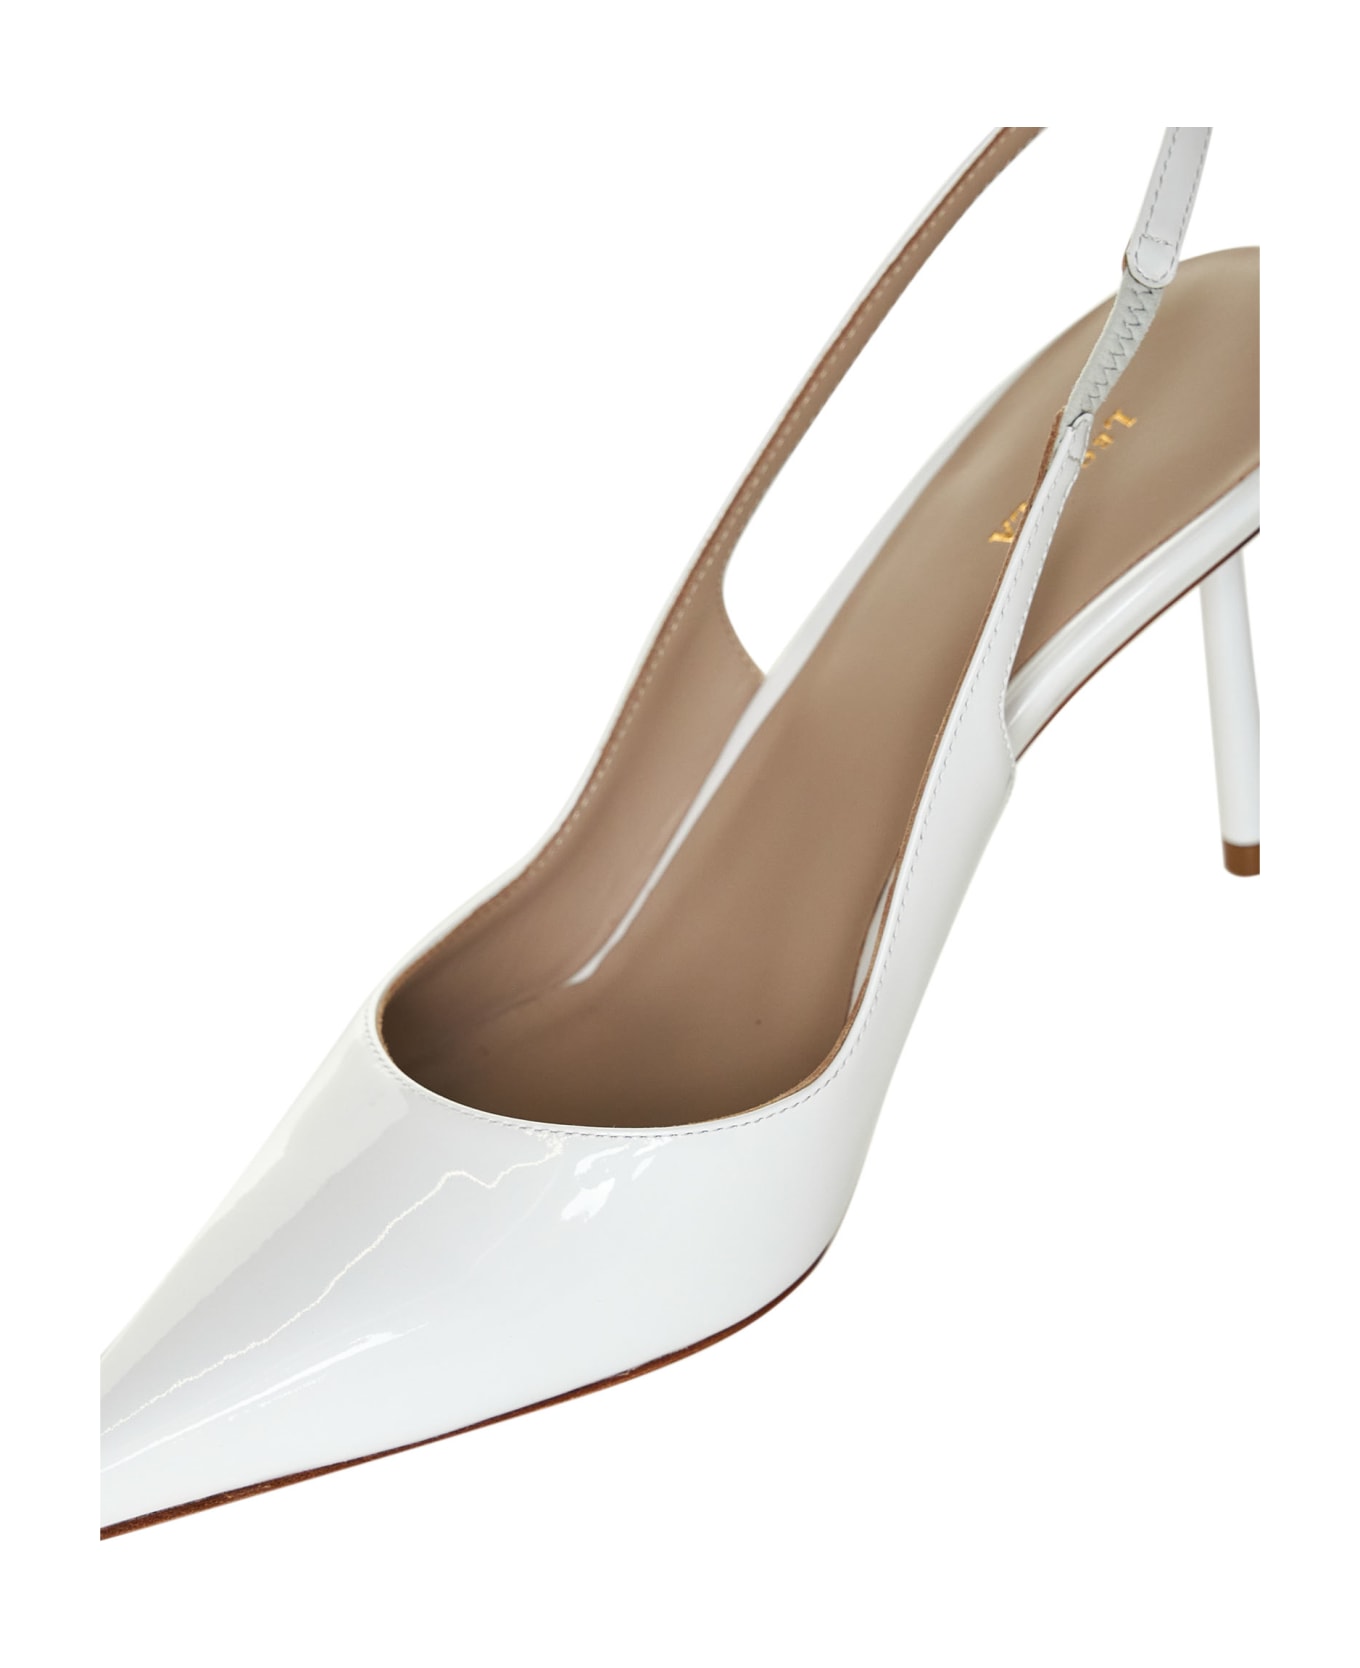 Le Silla High-heeled shoe - Carta